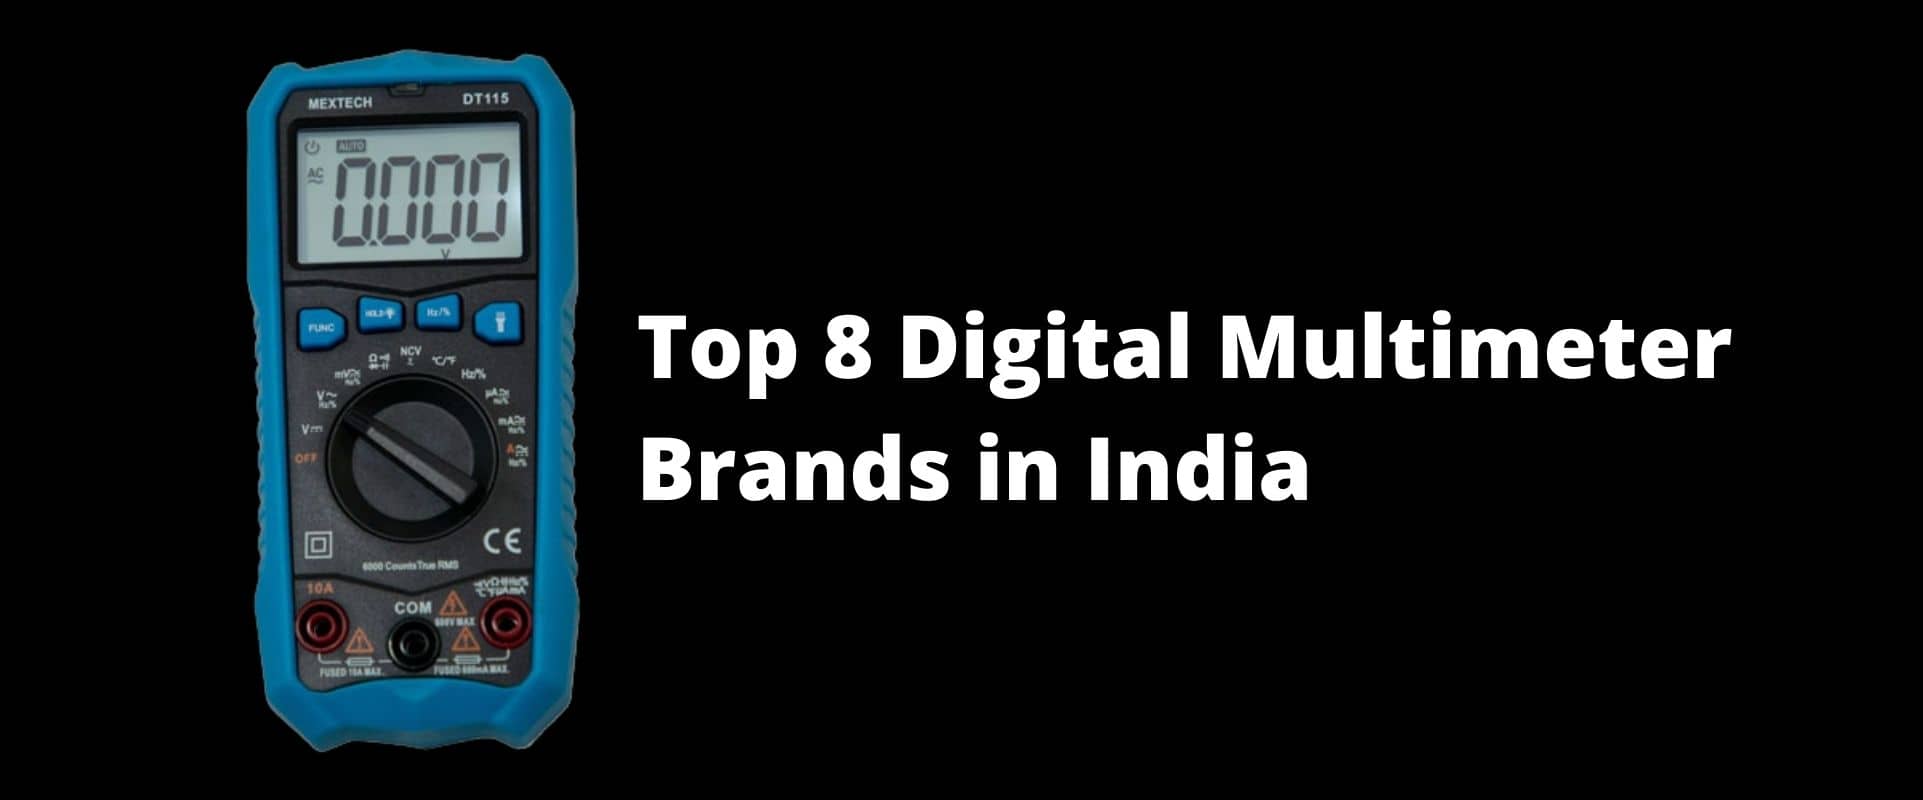 Top 8 Digital Multimeter Brands in India